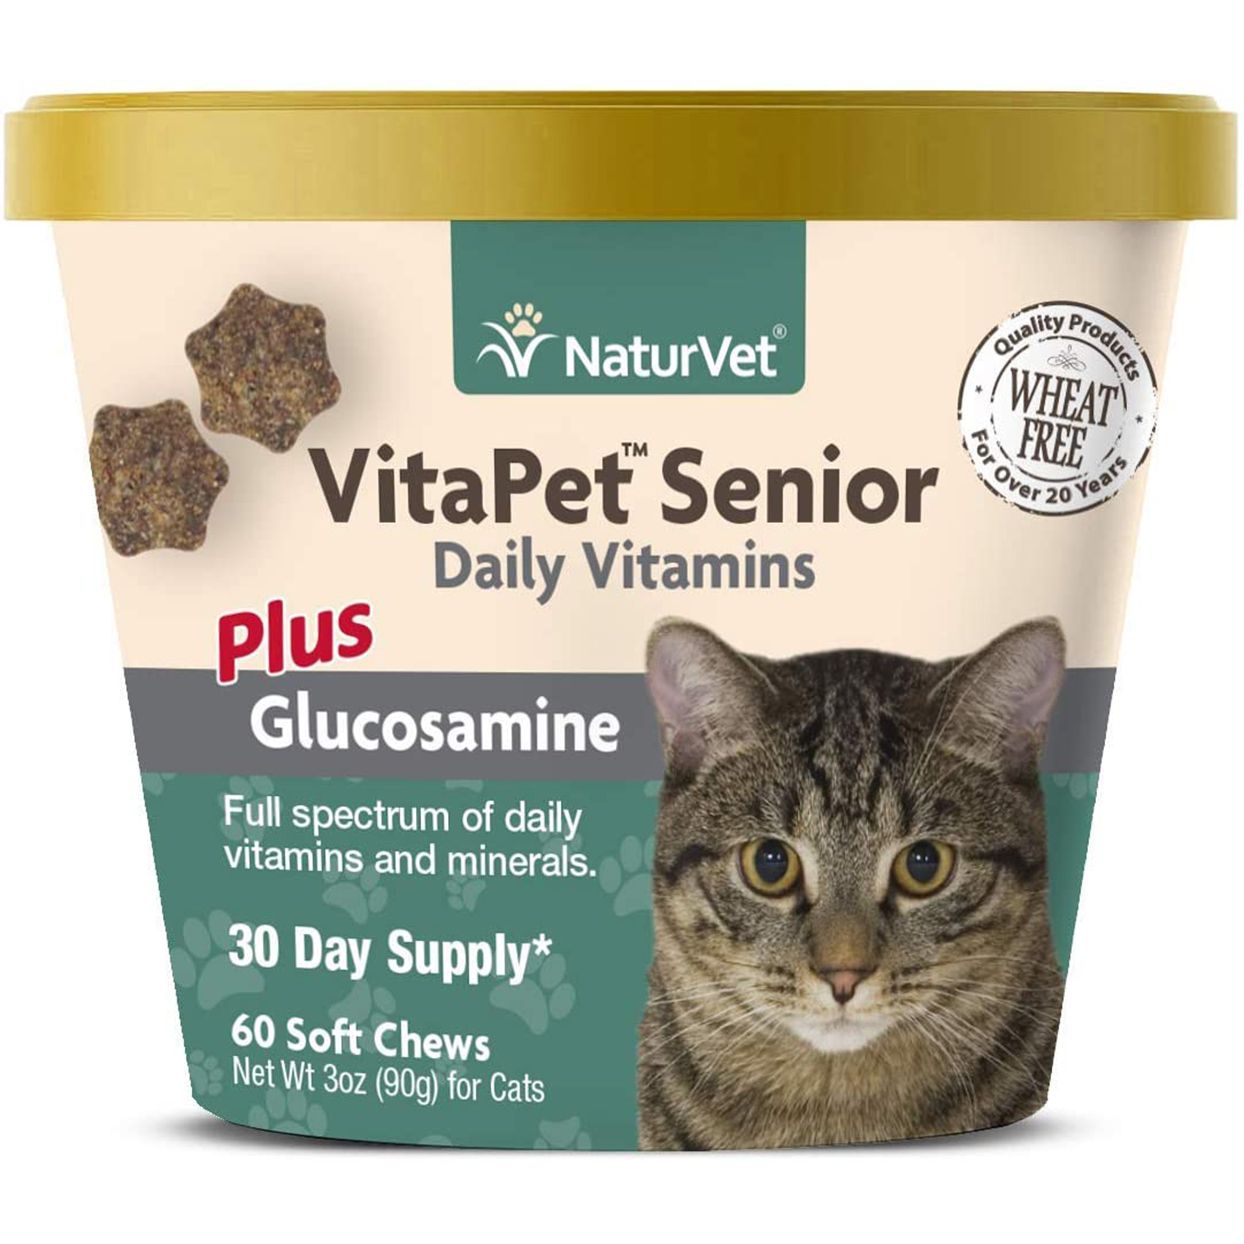 Senior cat daily vitamin